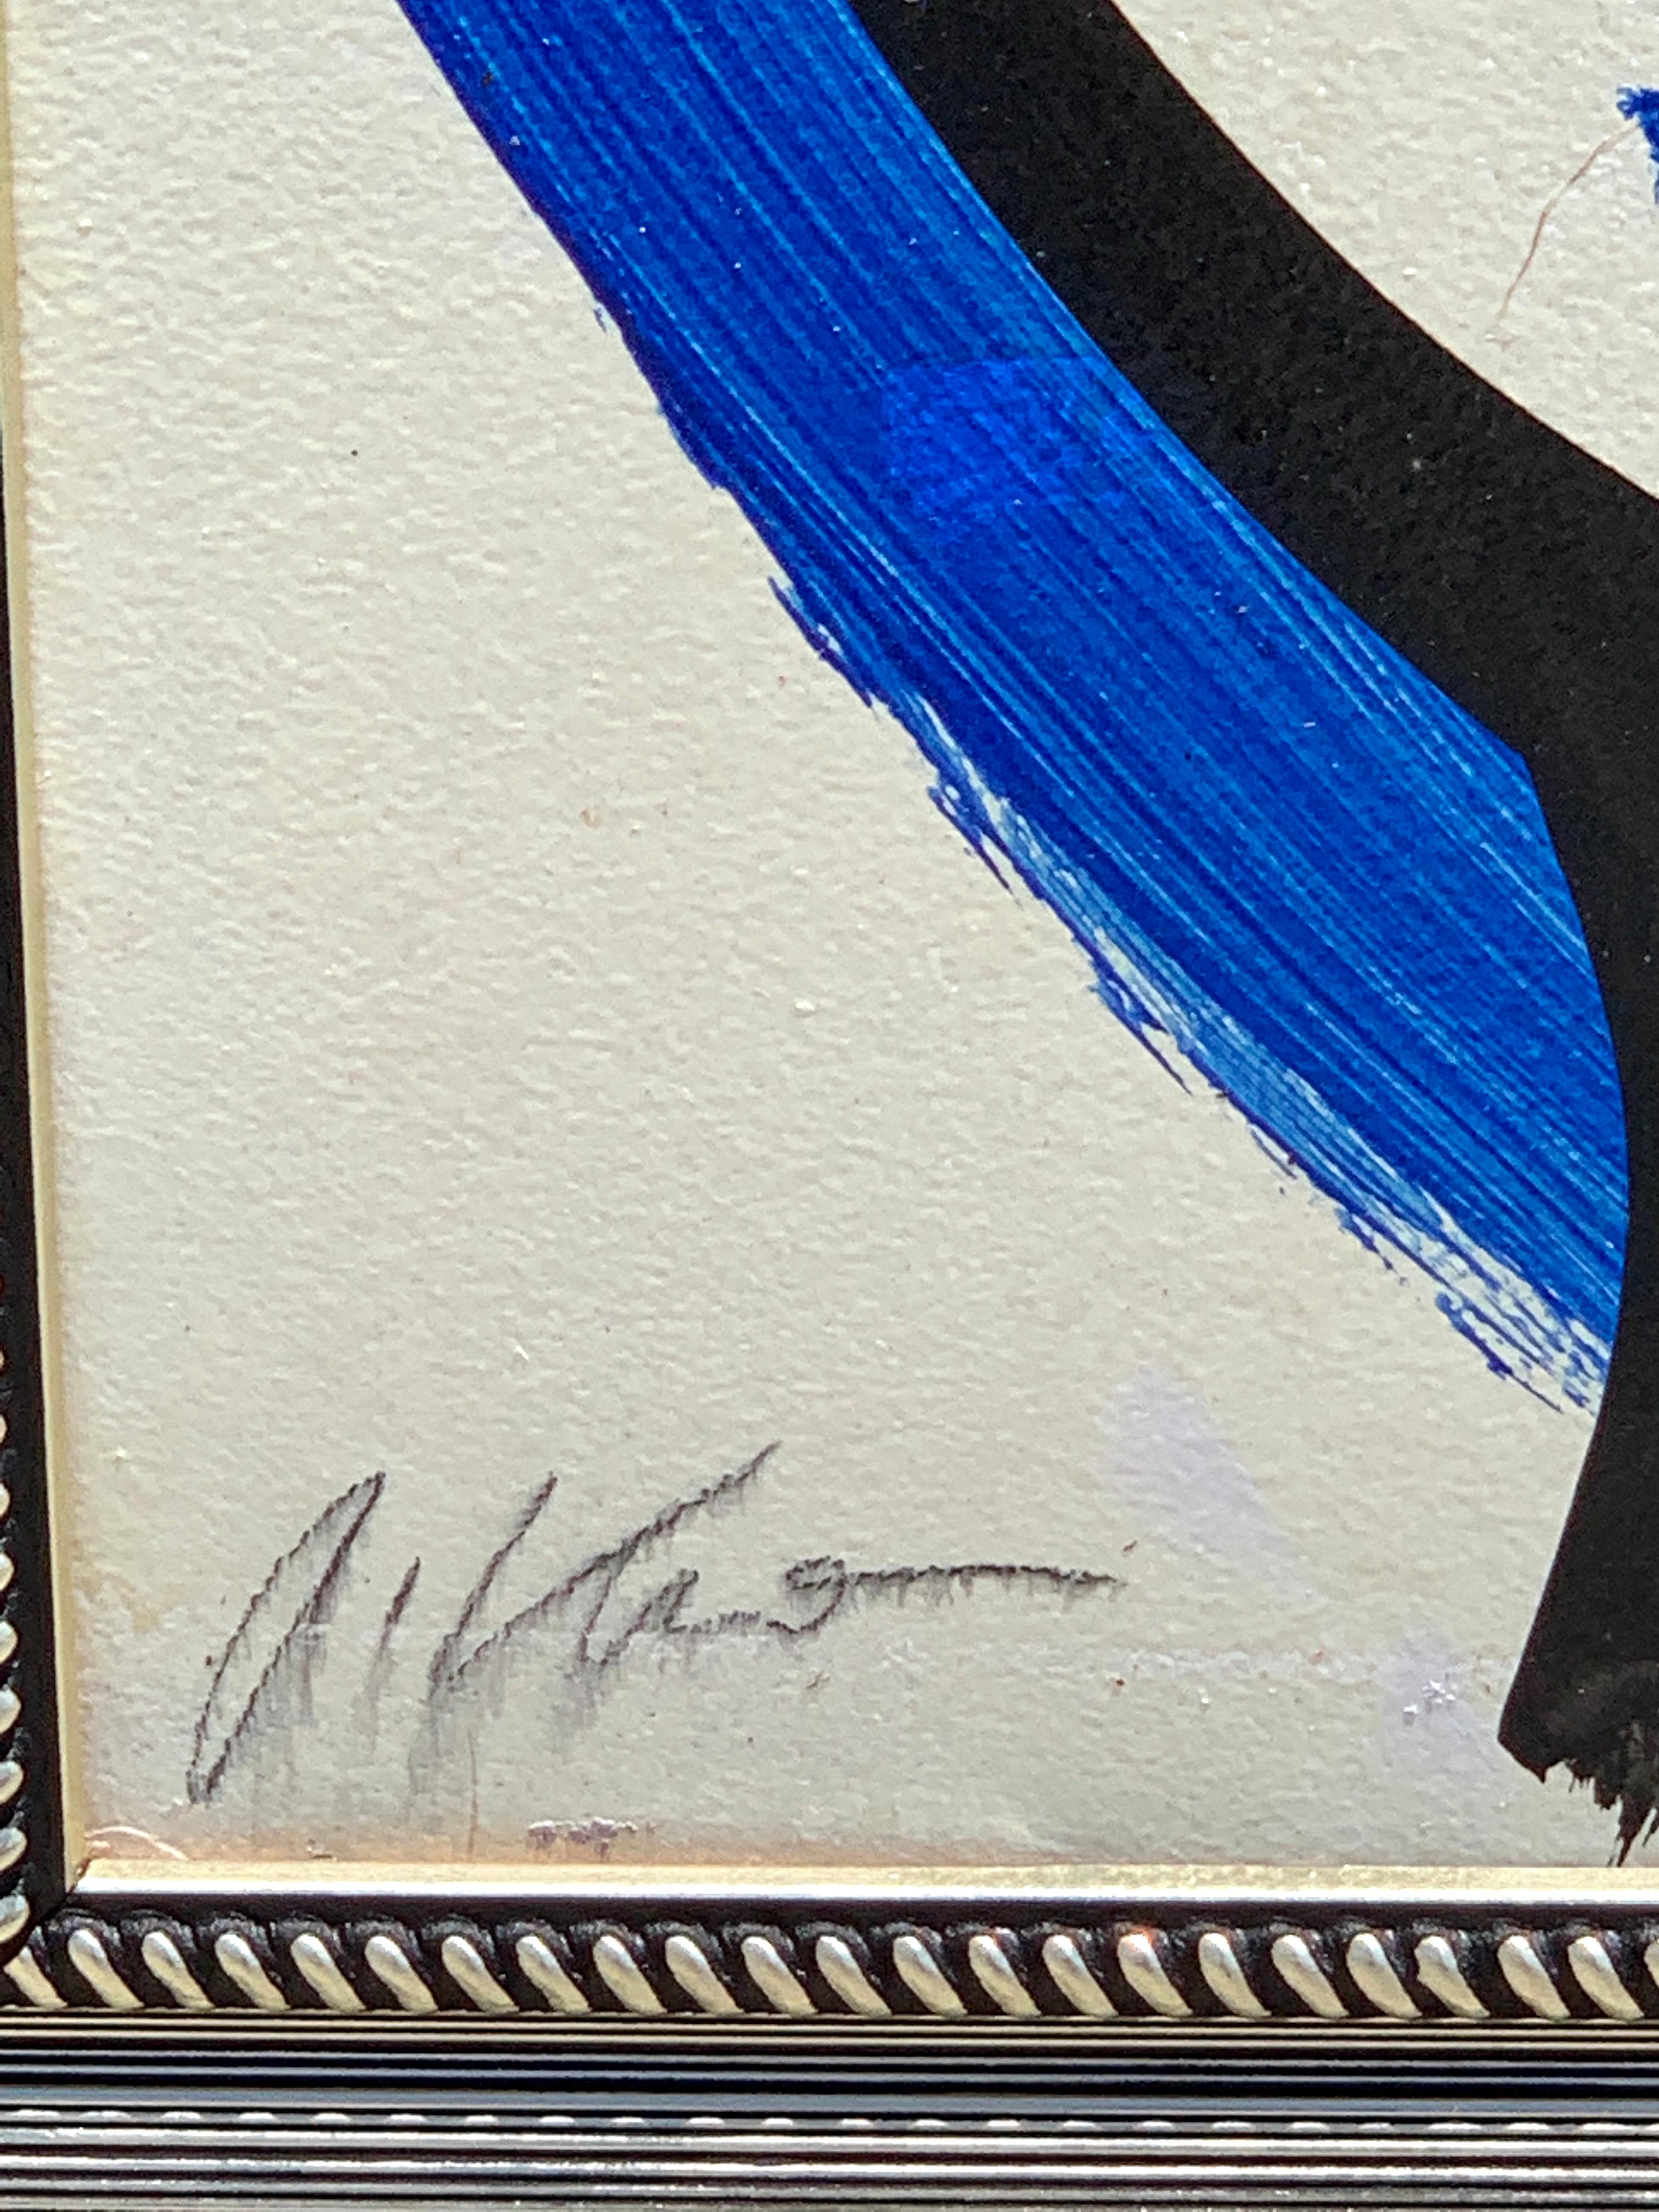 Peter Keil, Portrait of a Man, Blue Period  2